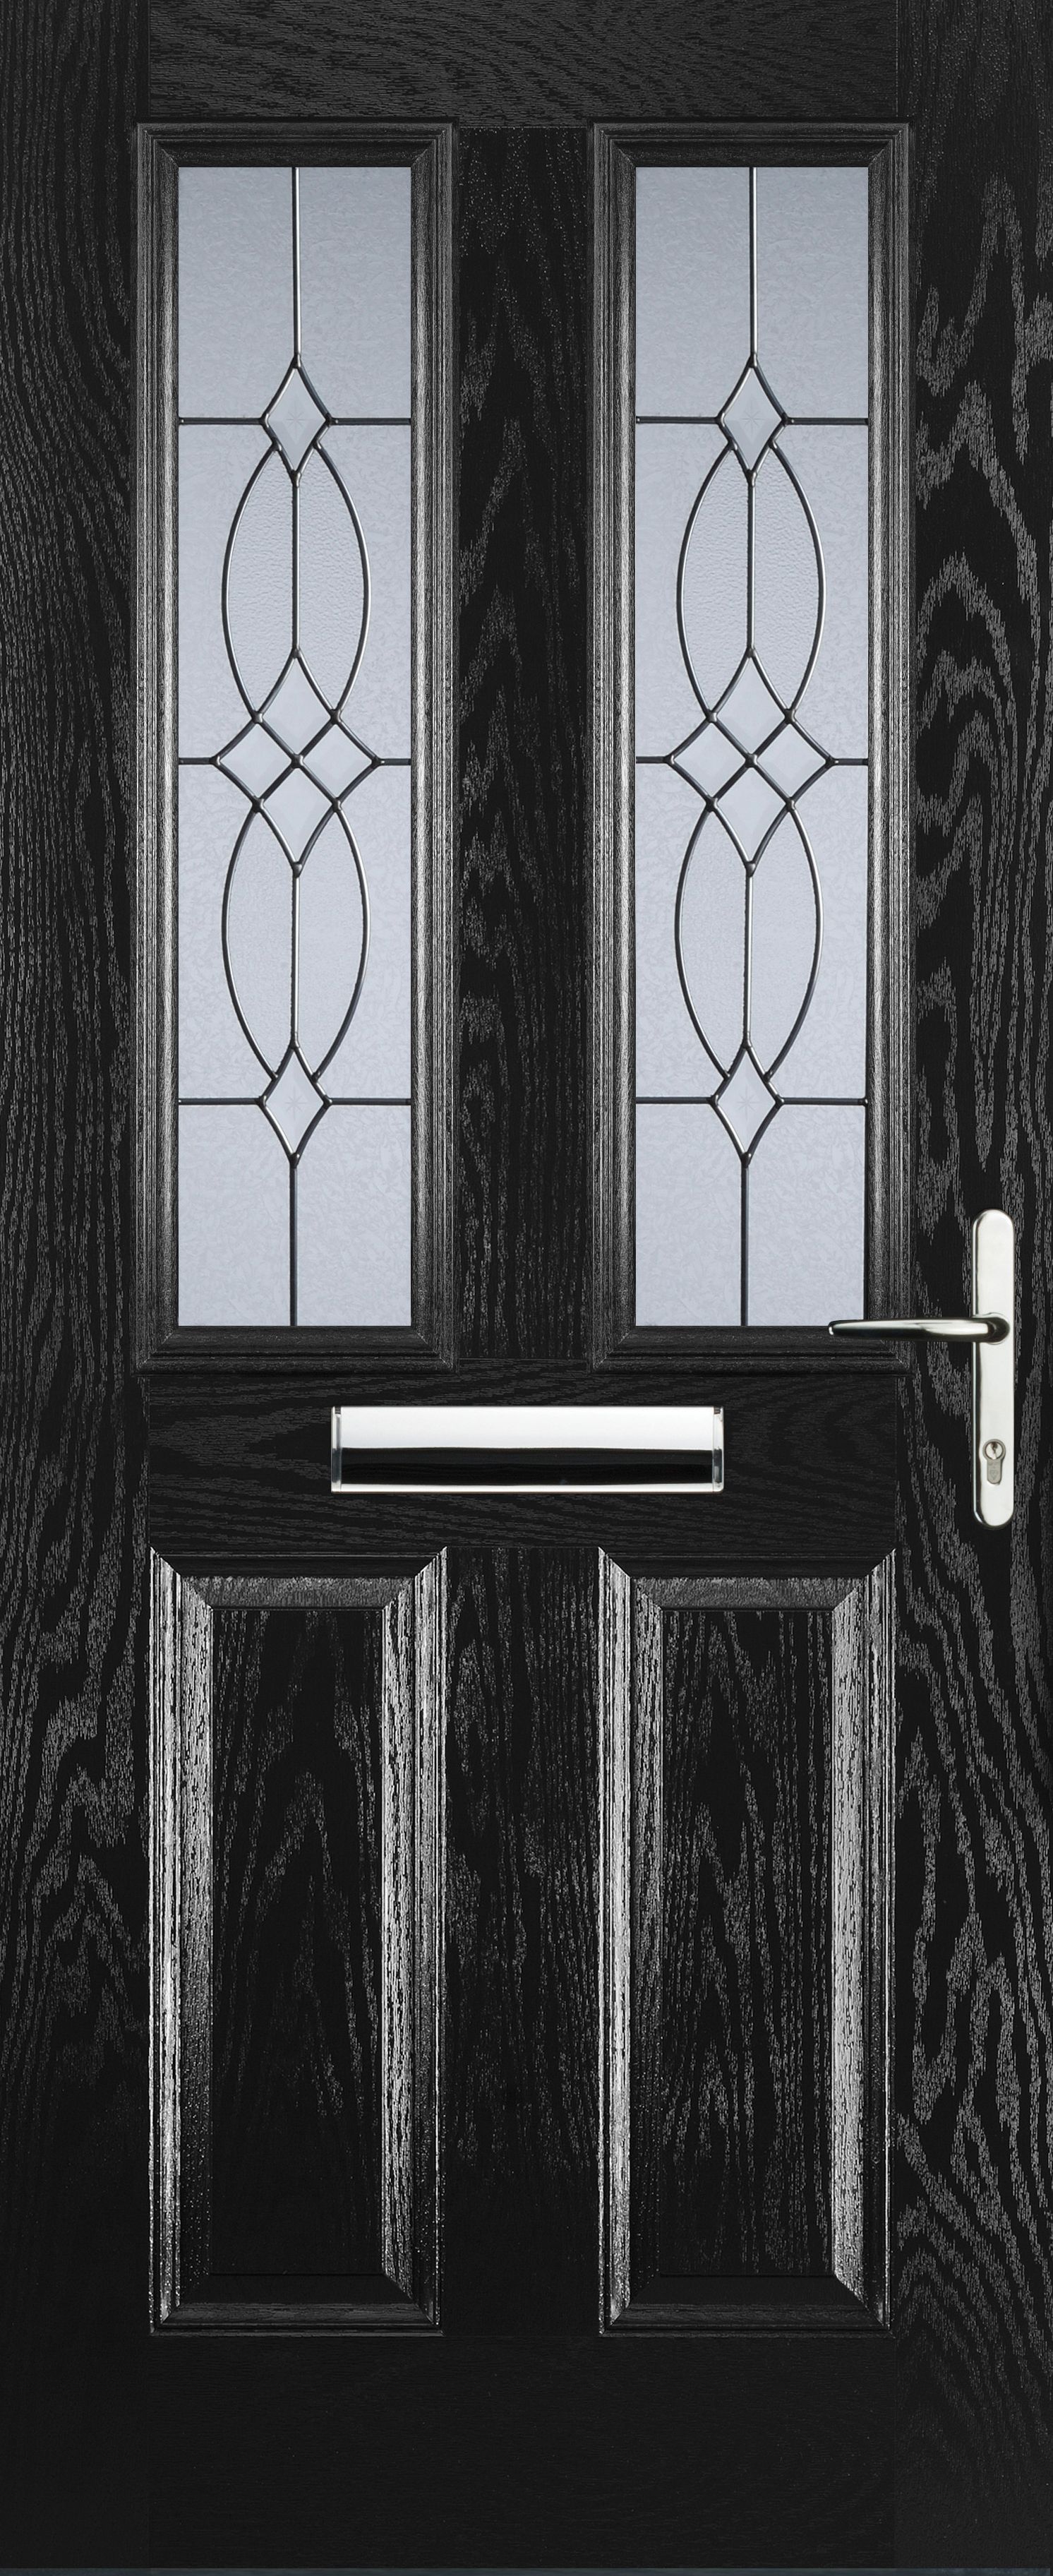 Image of Euramax 2 Panel 2 Square Left Hand Black Composite Door - 880 x 2100mm